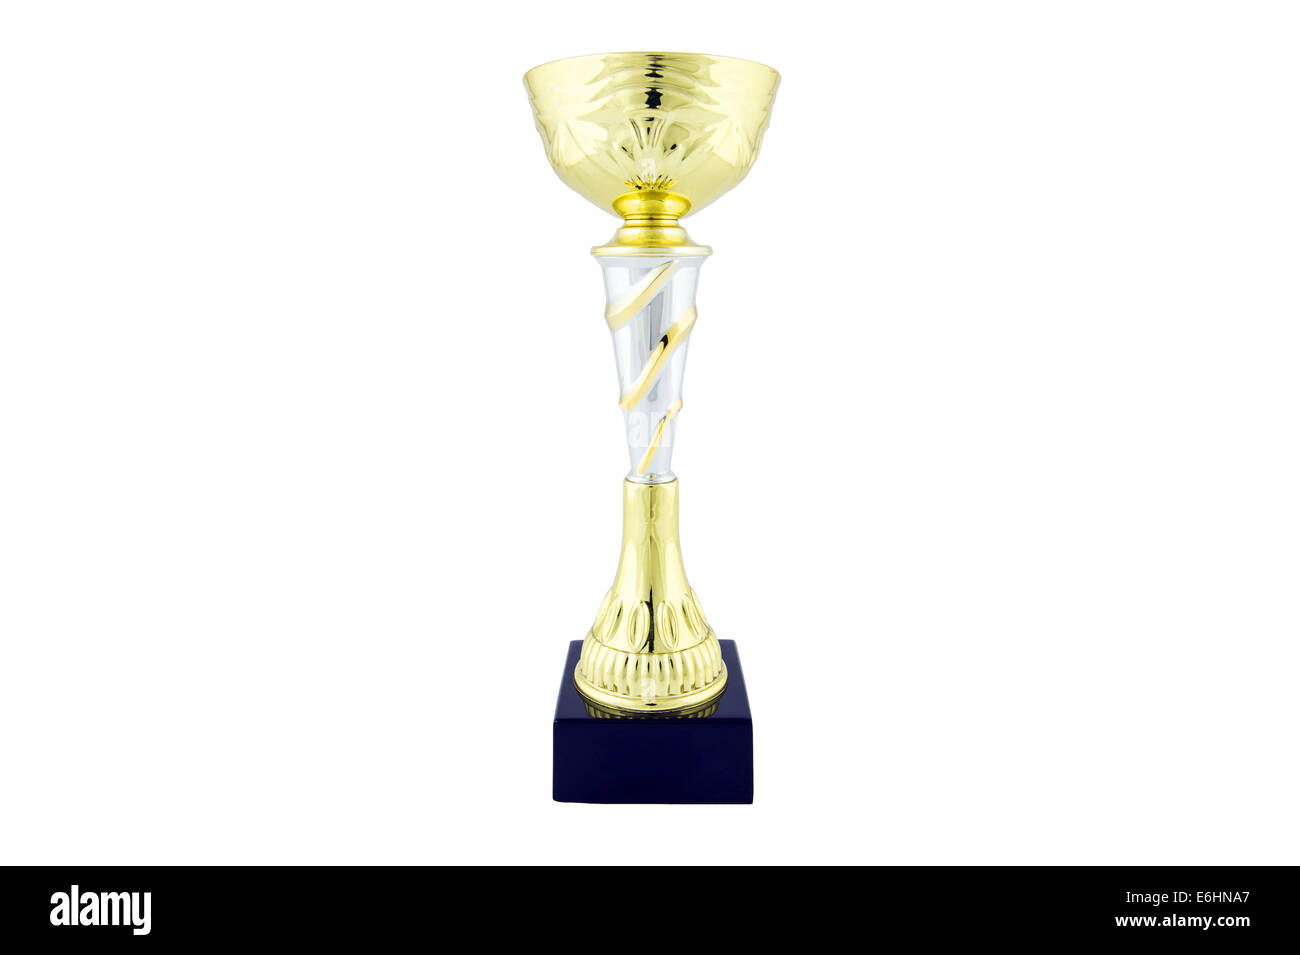 Gold trophy award isolated on white background Stock Photo